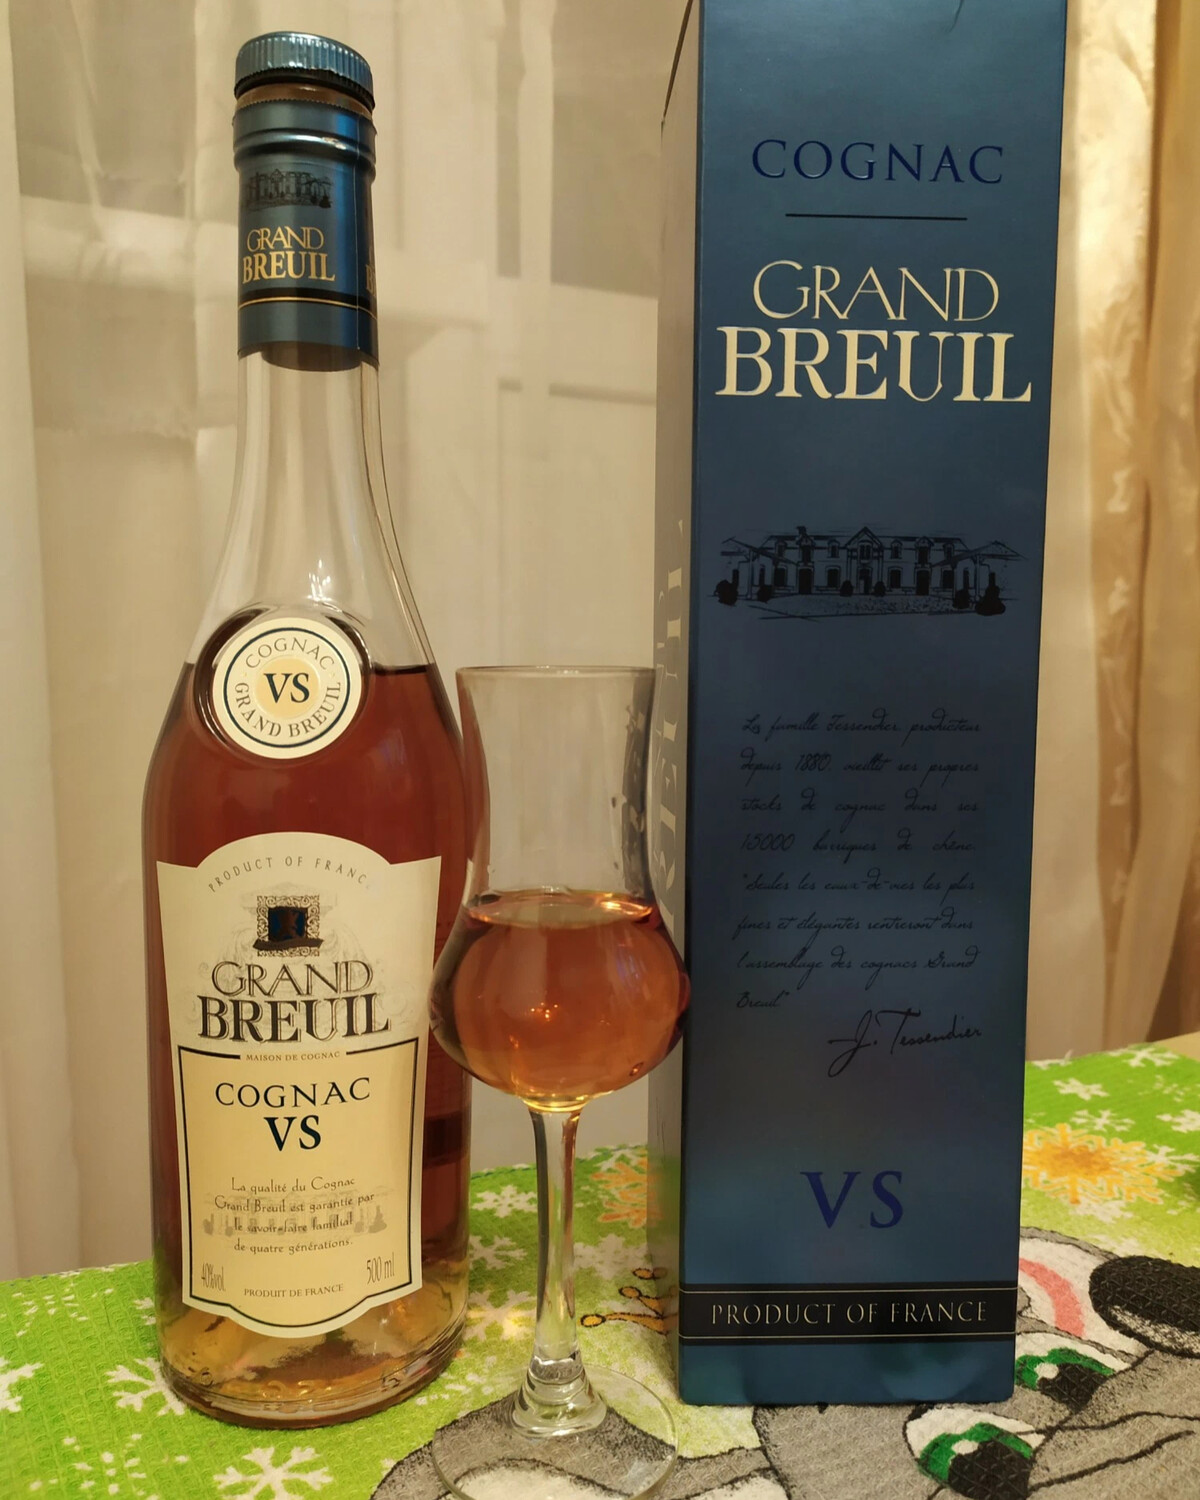 Cognac grand. Коньяк Гранд Бреул vs. Коньяк Grand Breuil. Коньяк французский Breuil. Французский коньяк Гранд Бреул.